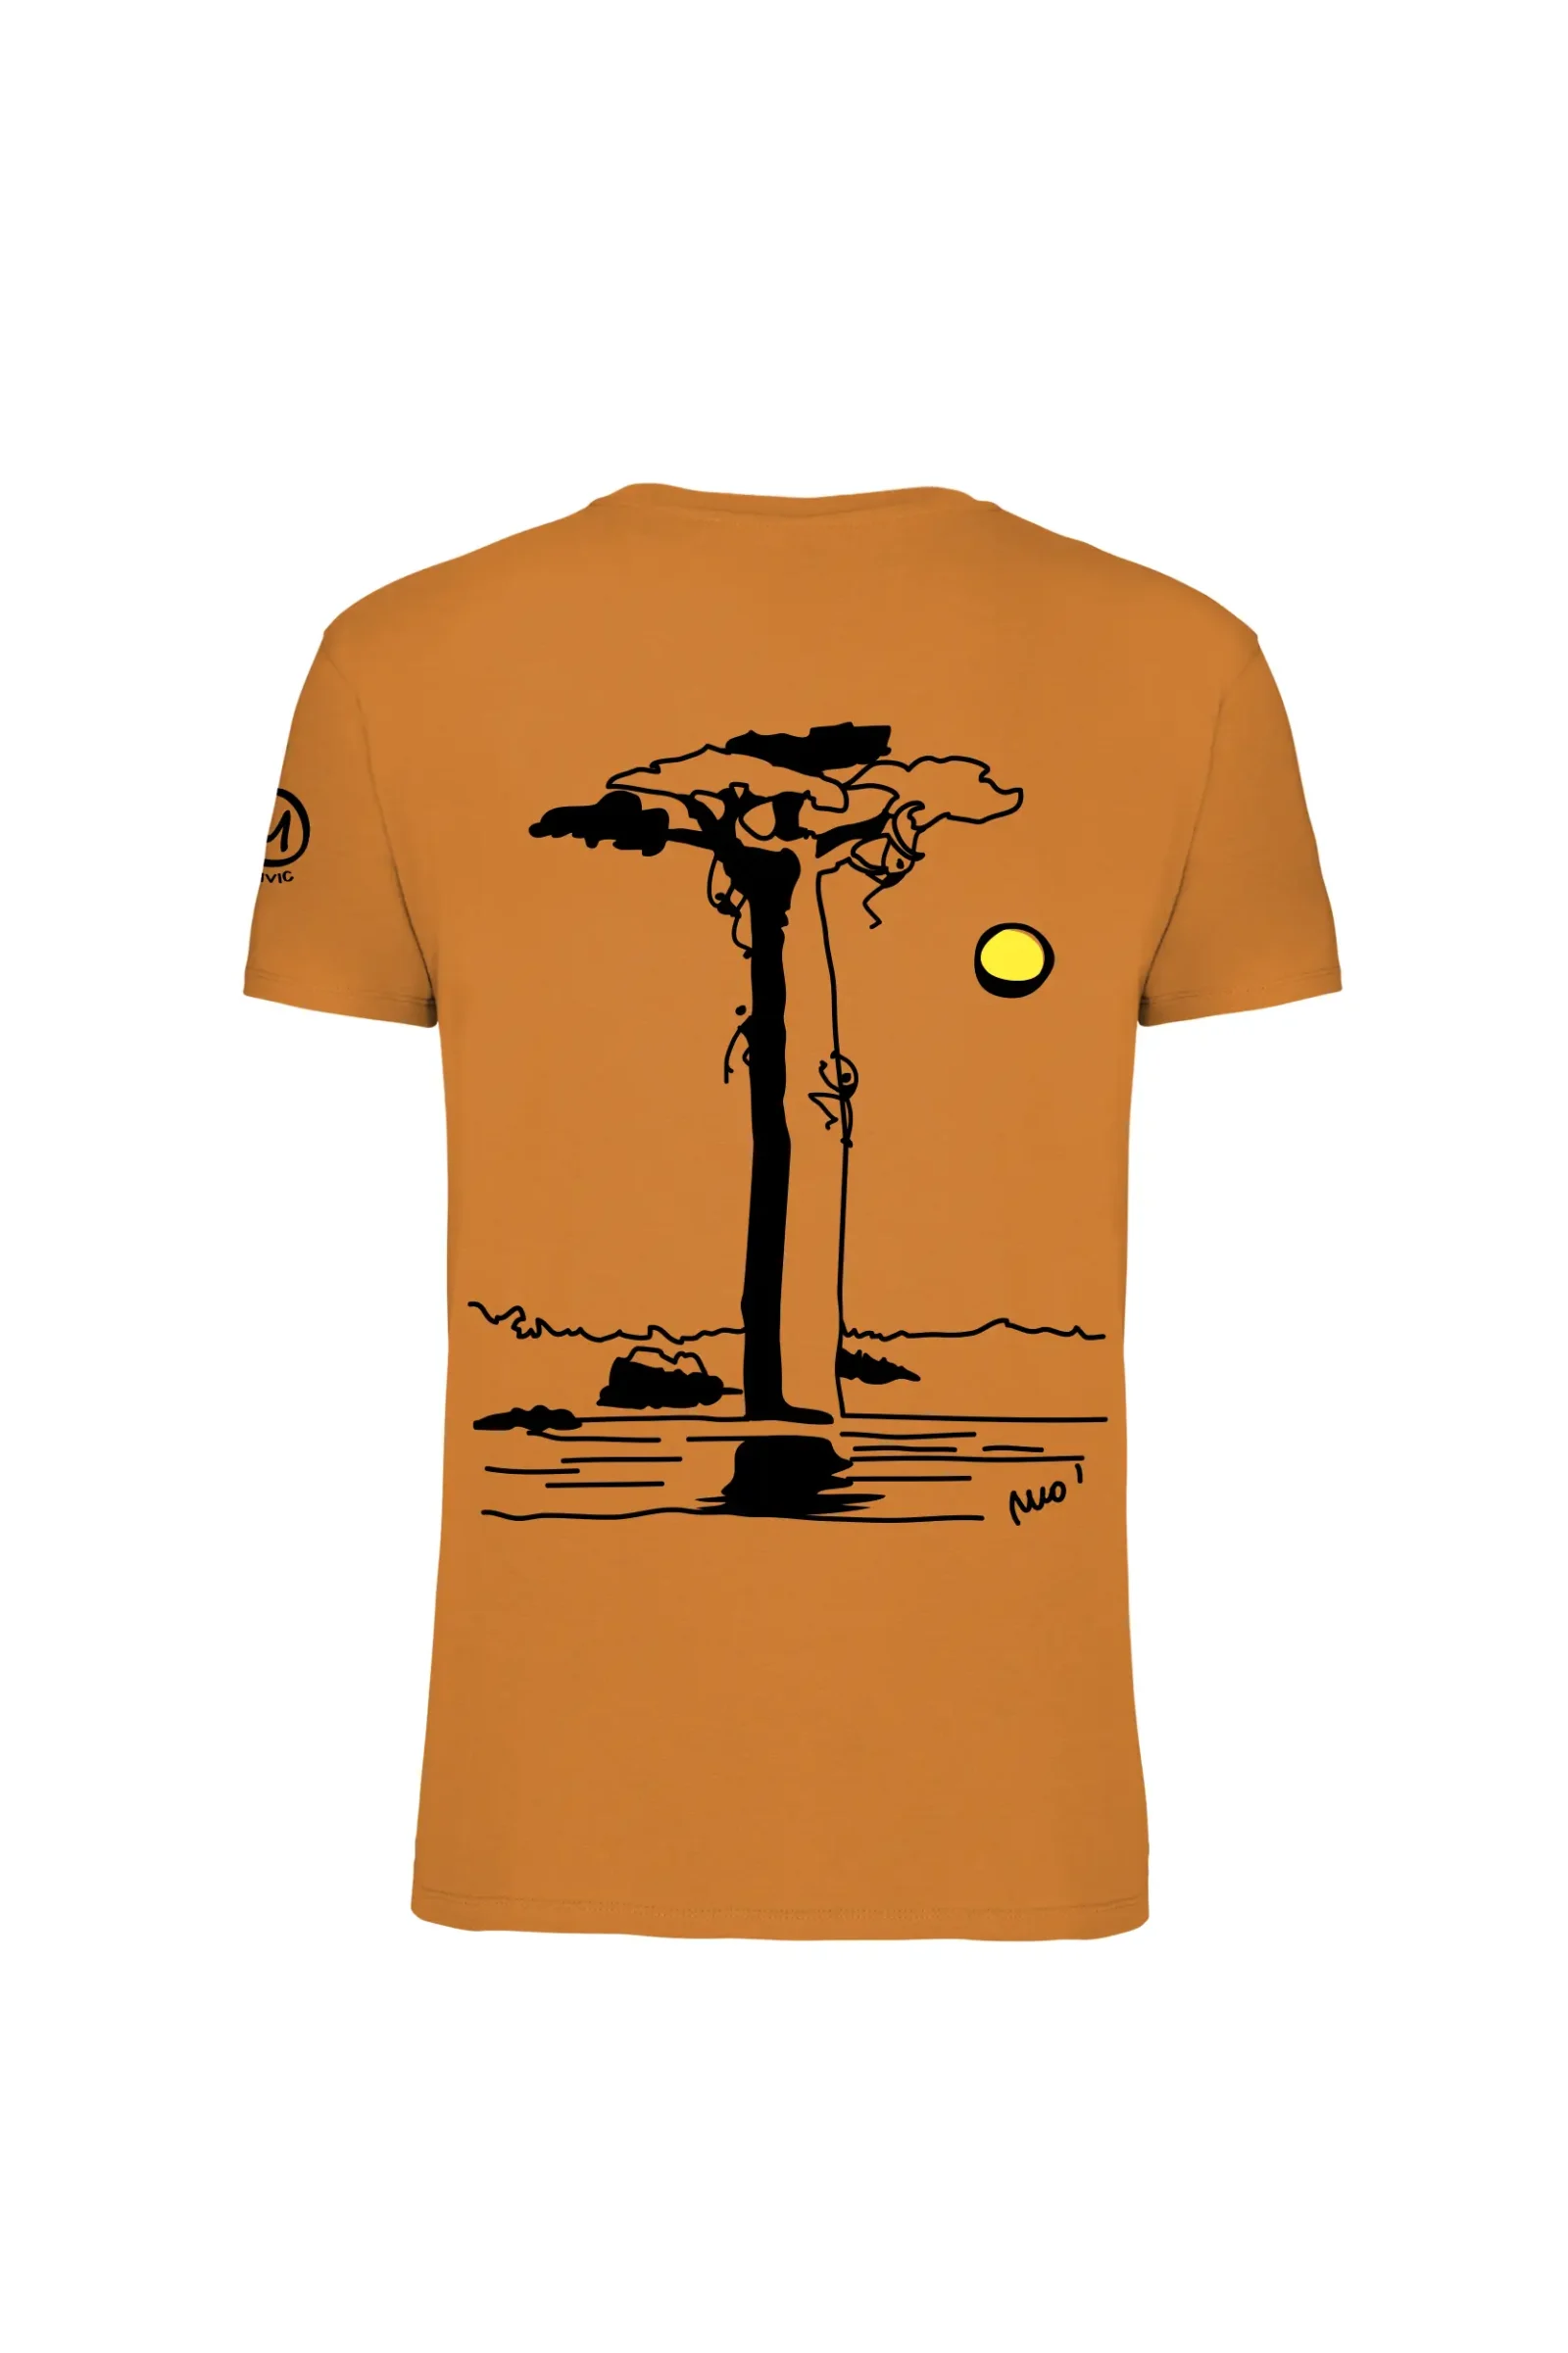 T-shirt arrampicata uomo - cotone organico arancione - "Baobab" - HASH ORGANIC MONVIC